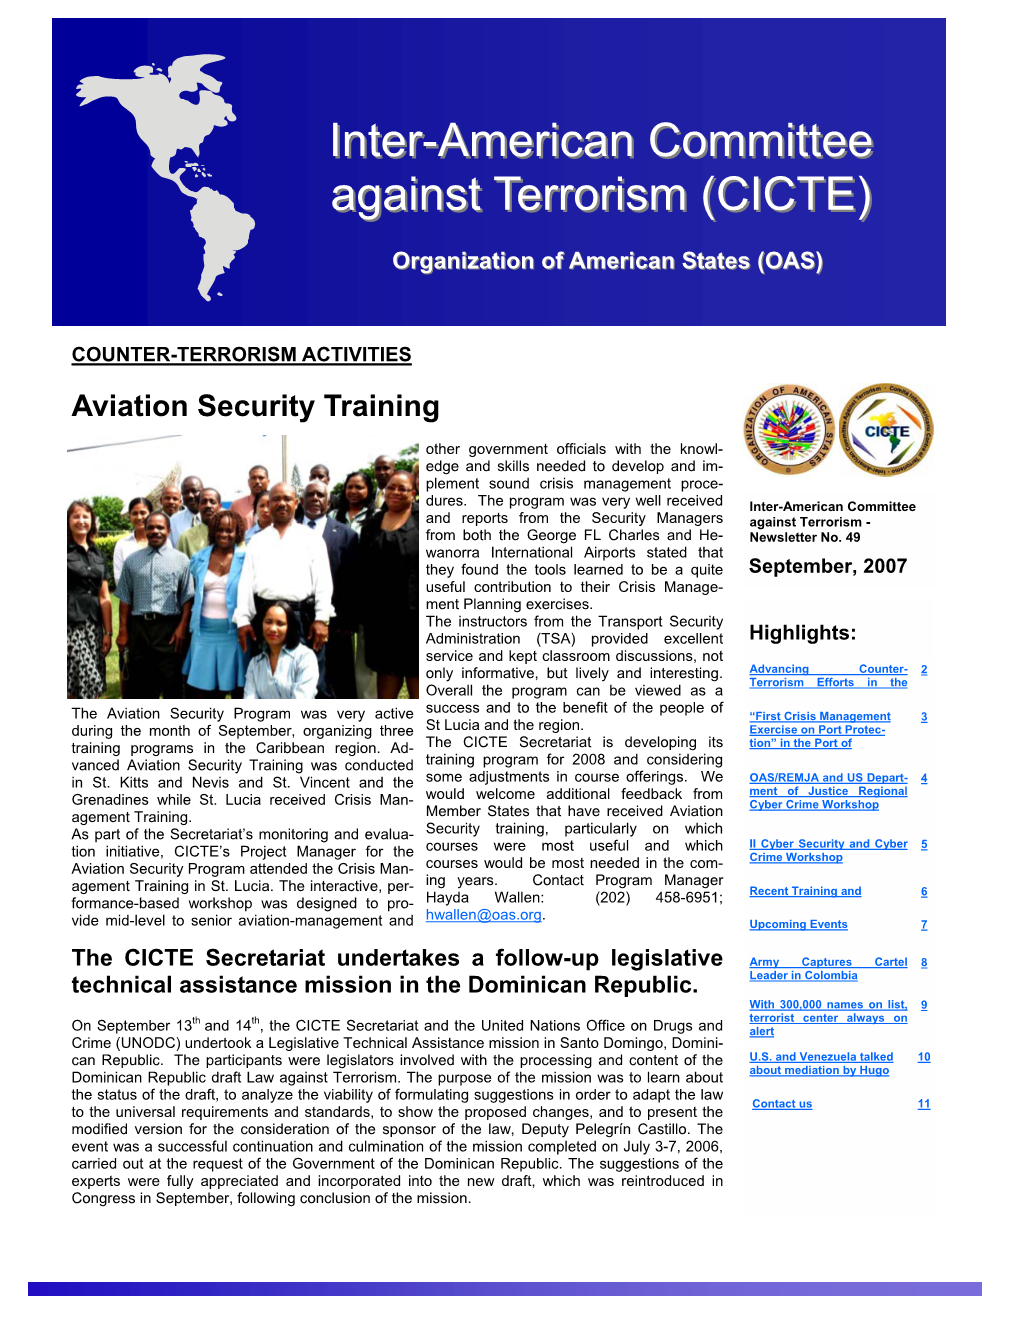 Inter-American Committee Against Terrorism (CICTE)